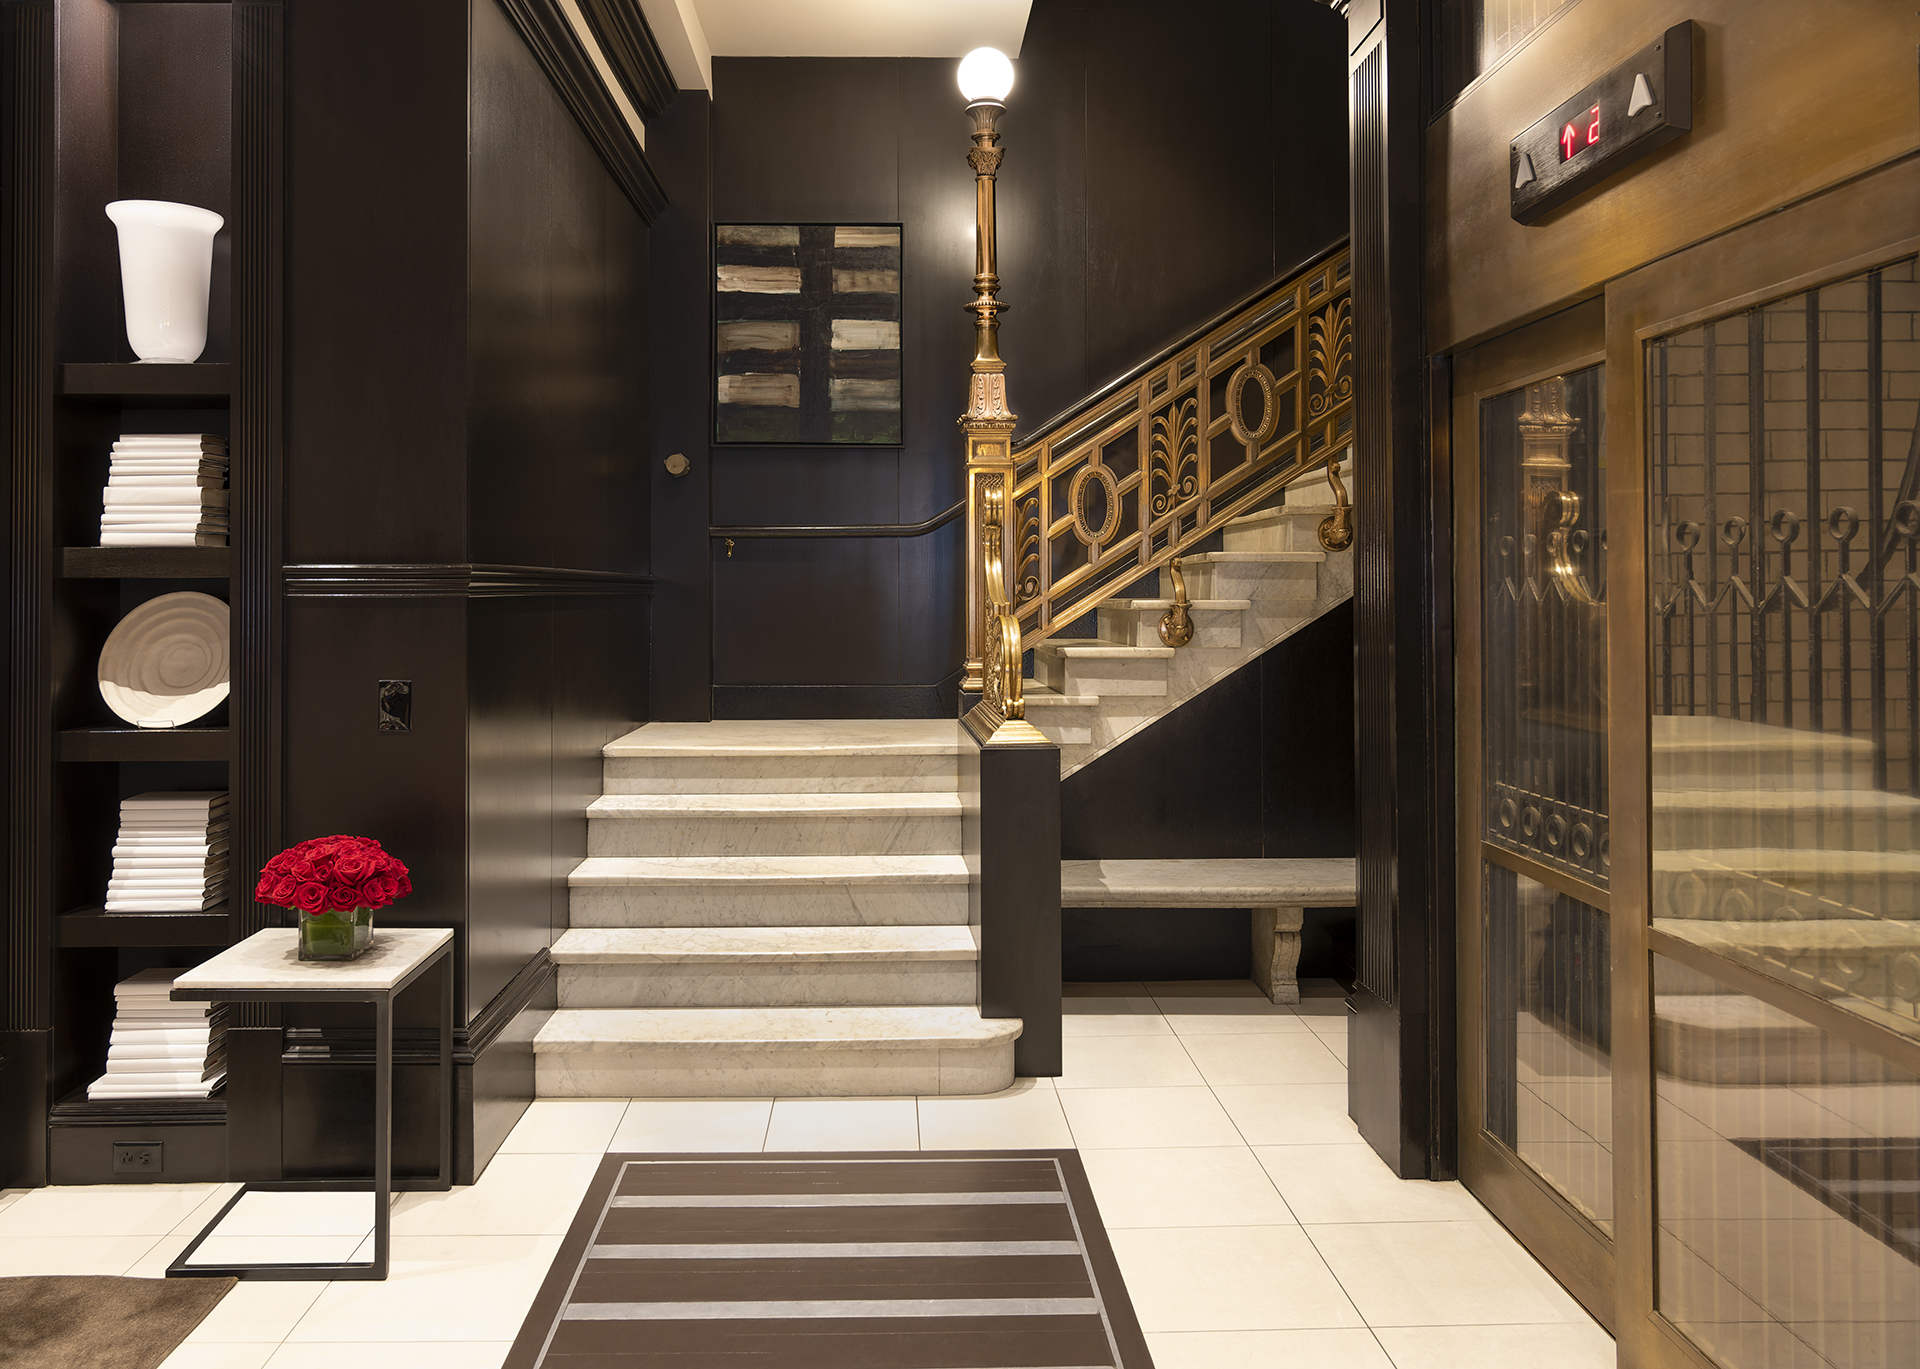 XV Beacon Hotel, Boston, MA, USA, original historic staircase and lift